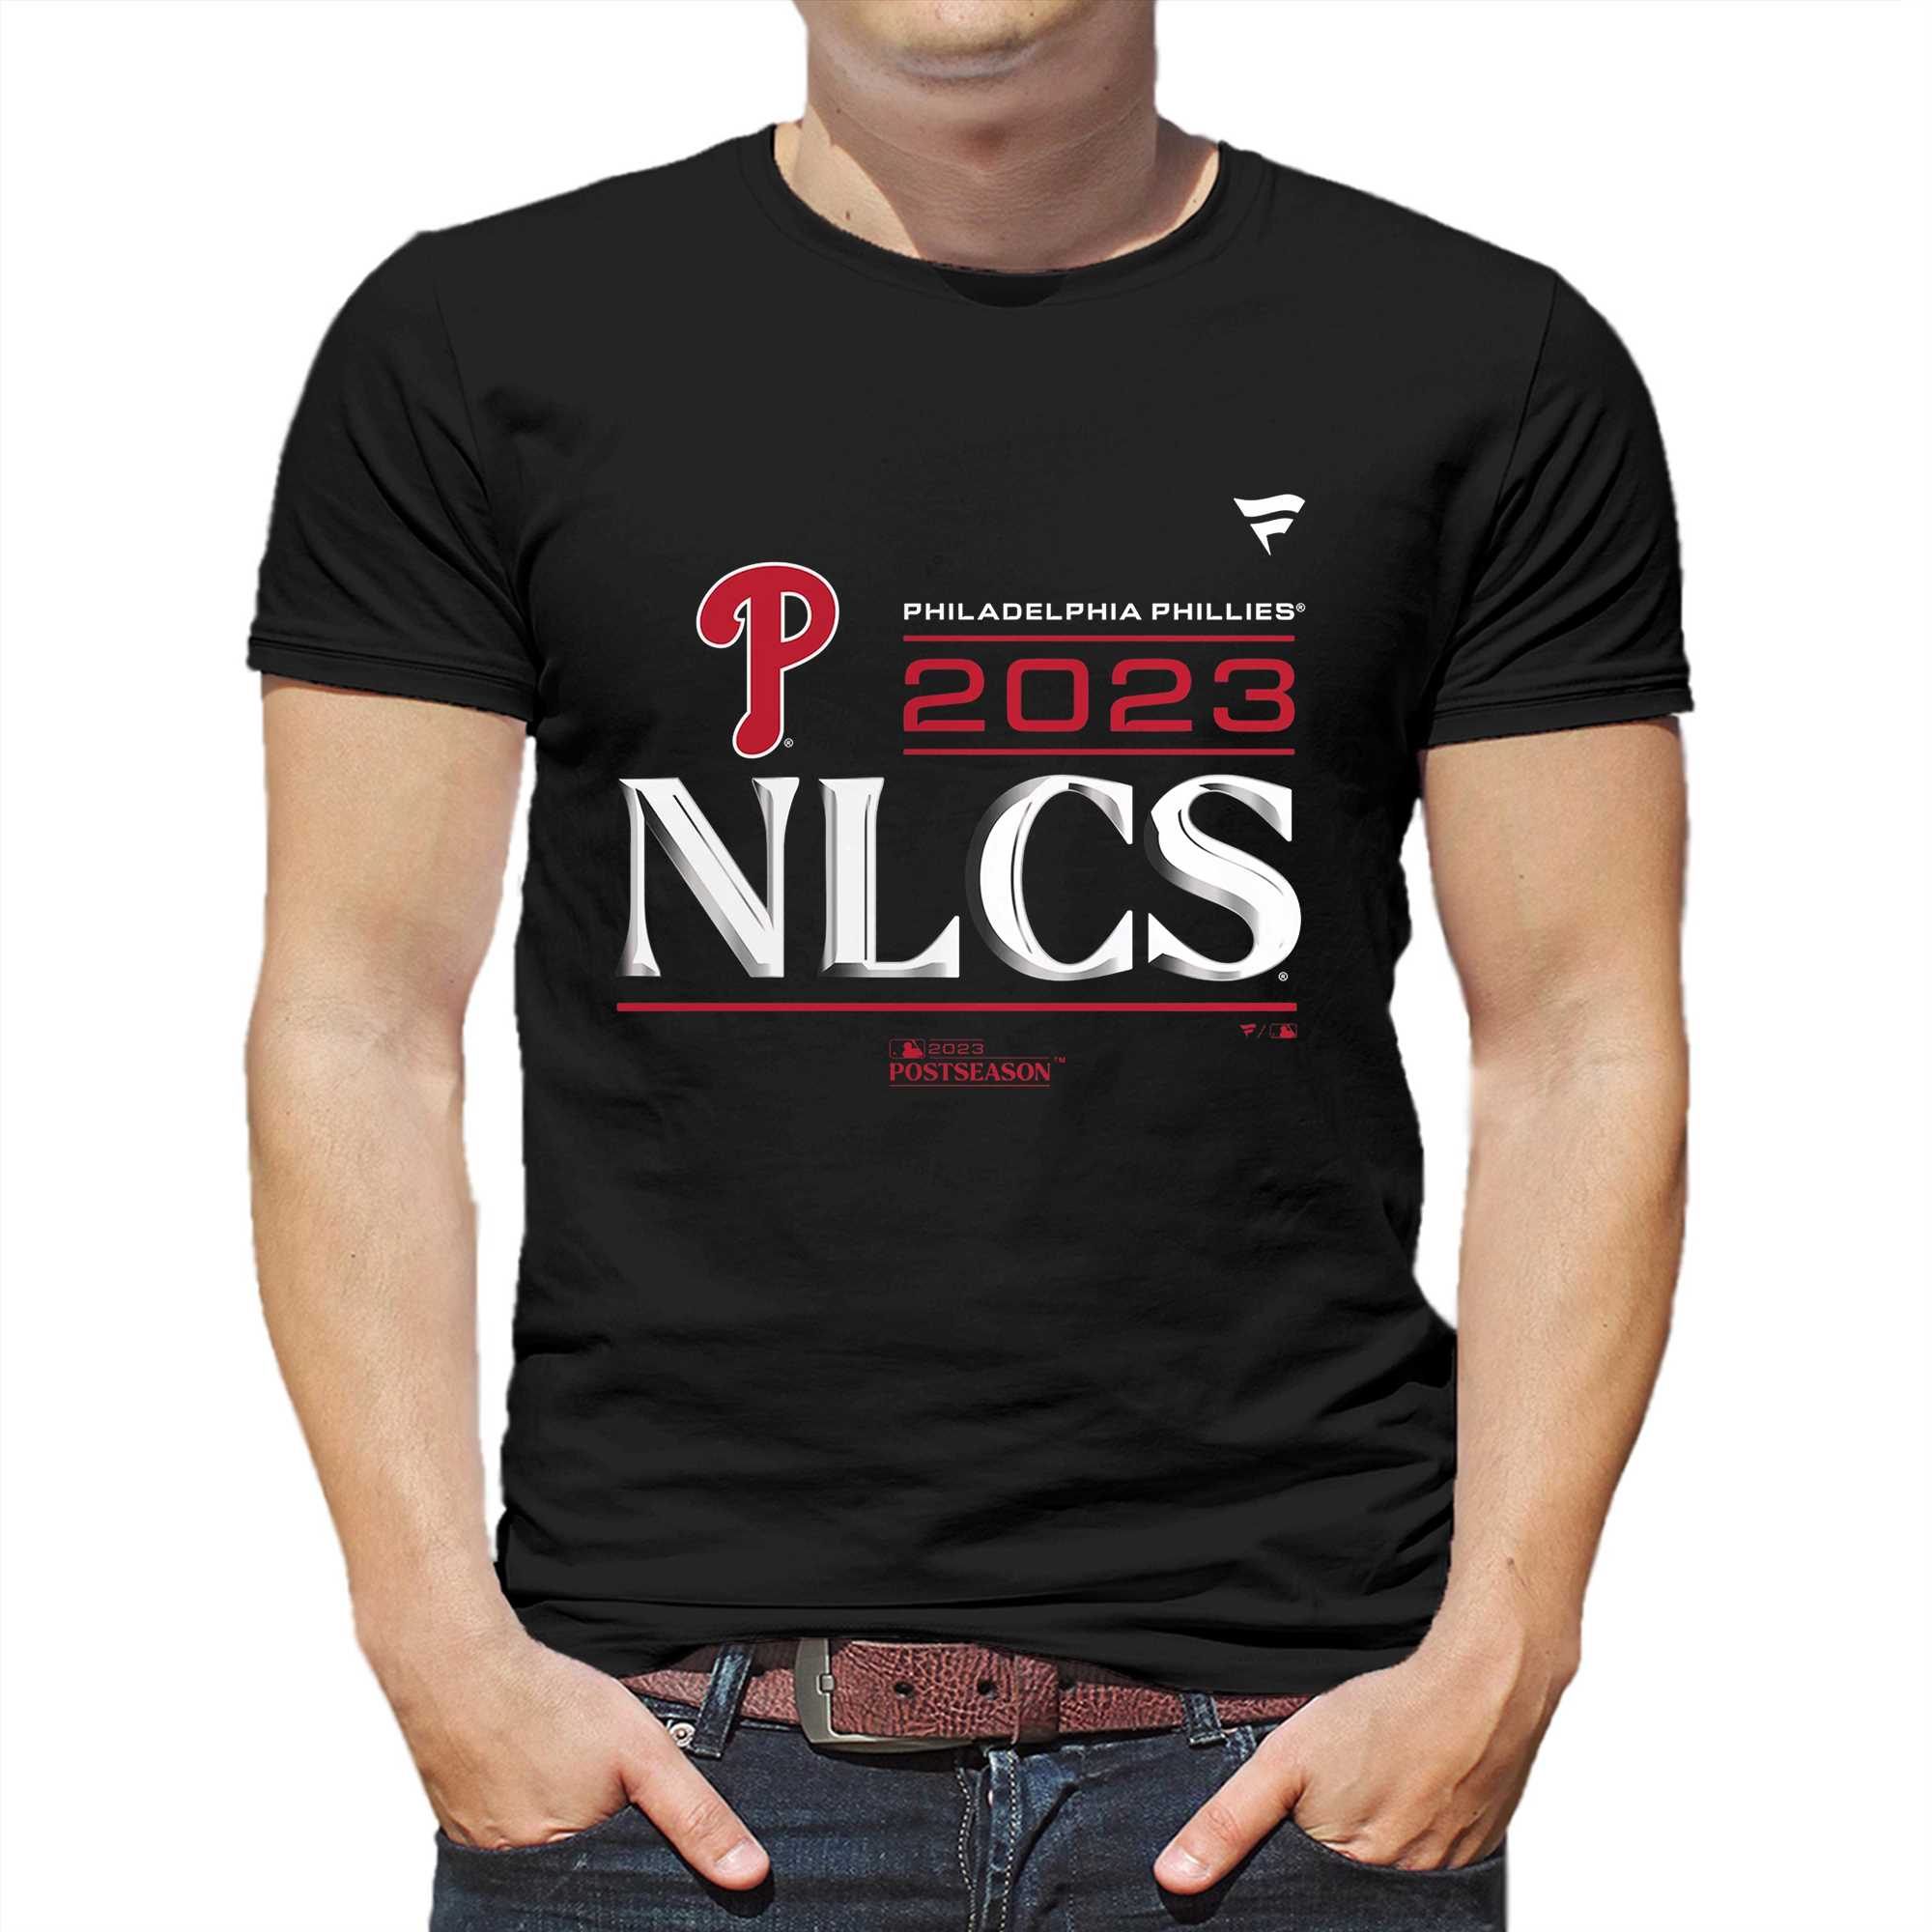 Philadelphia Phillies National League championship shirts, hats